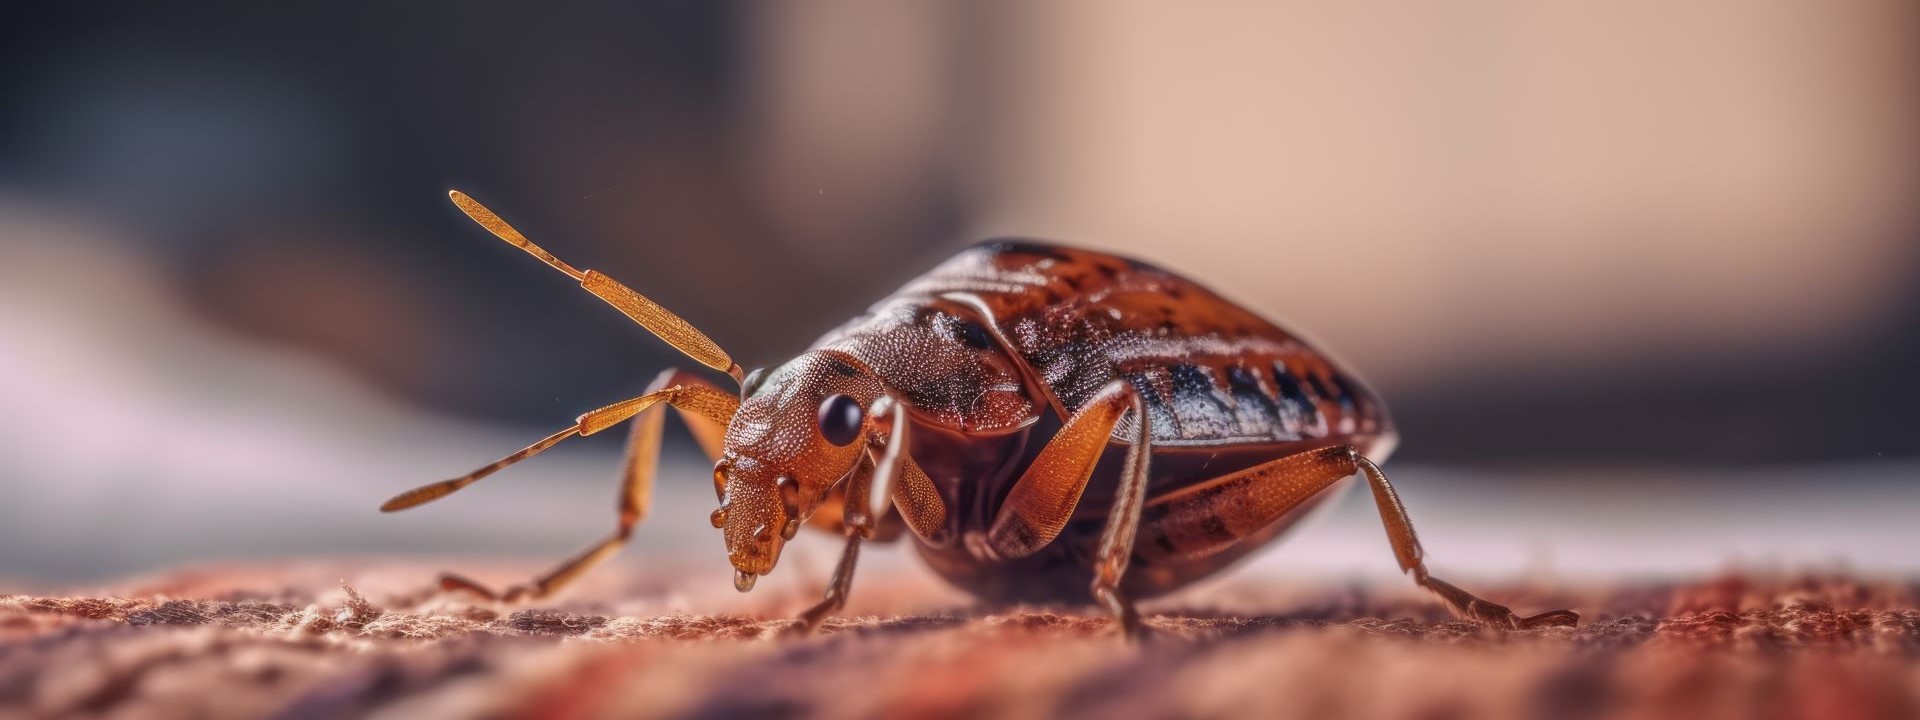 Macro view of a bed bug walking across a mattress.